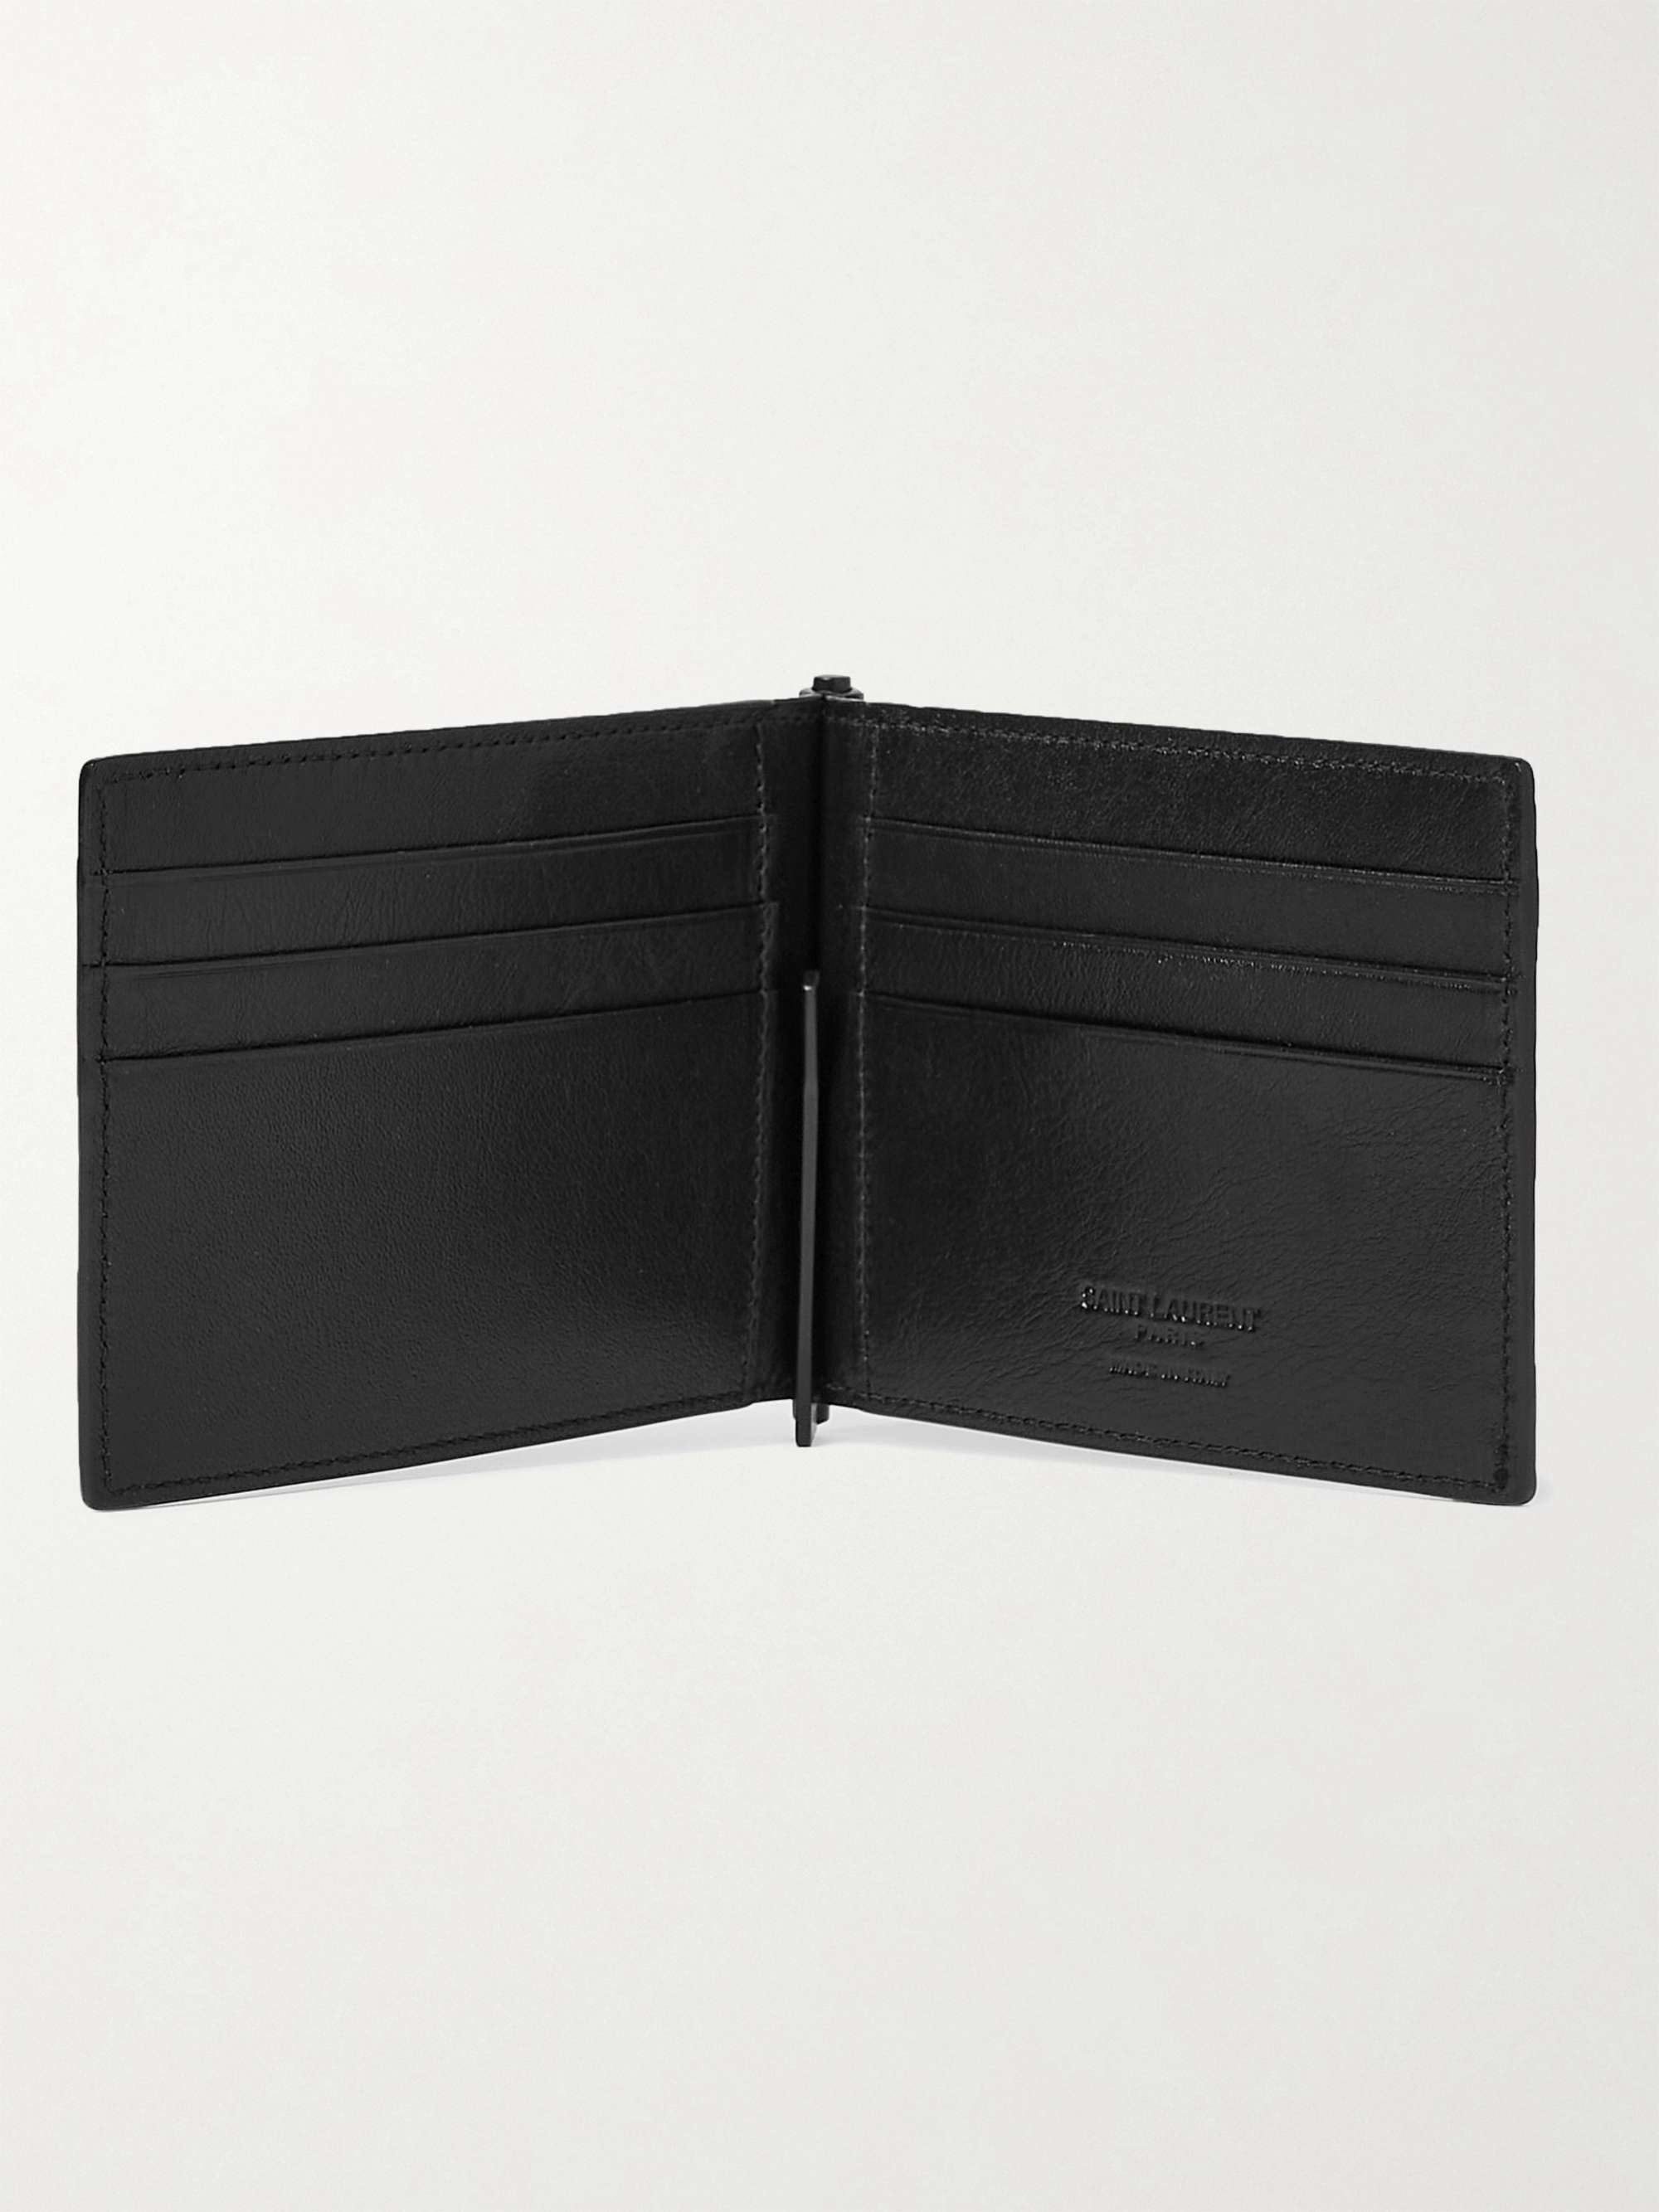 SAINT LAURENT Logo-Debossed Leather Wallet with Money Clip